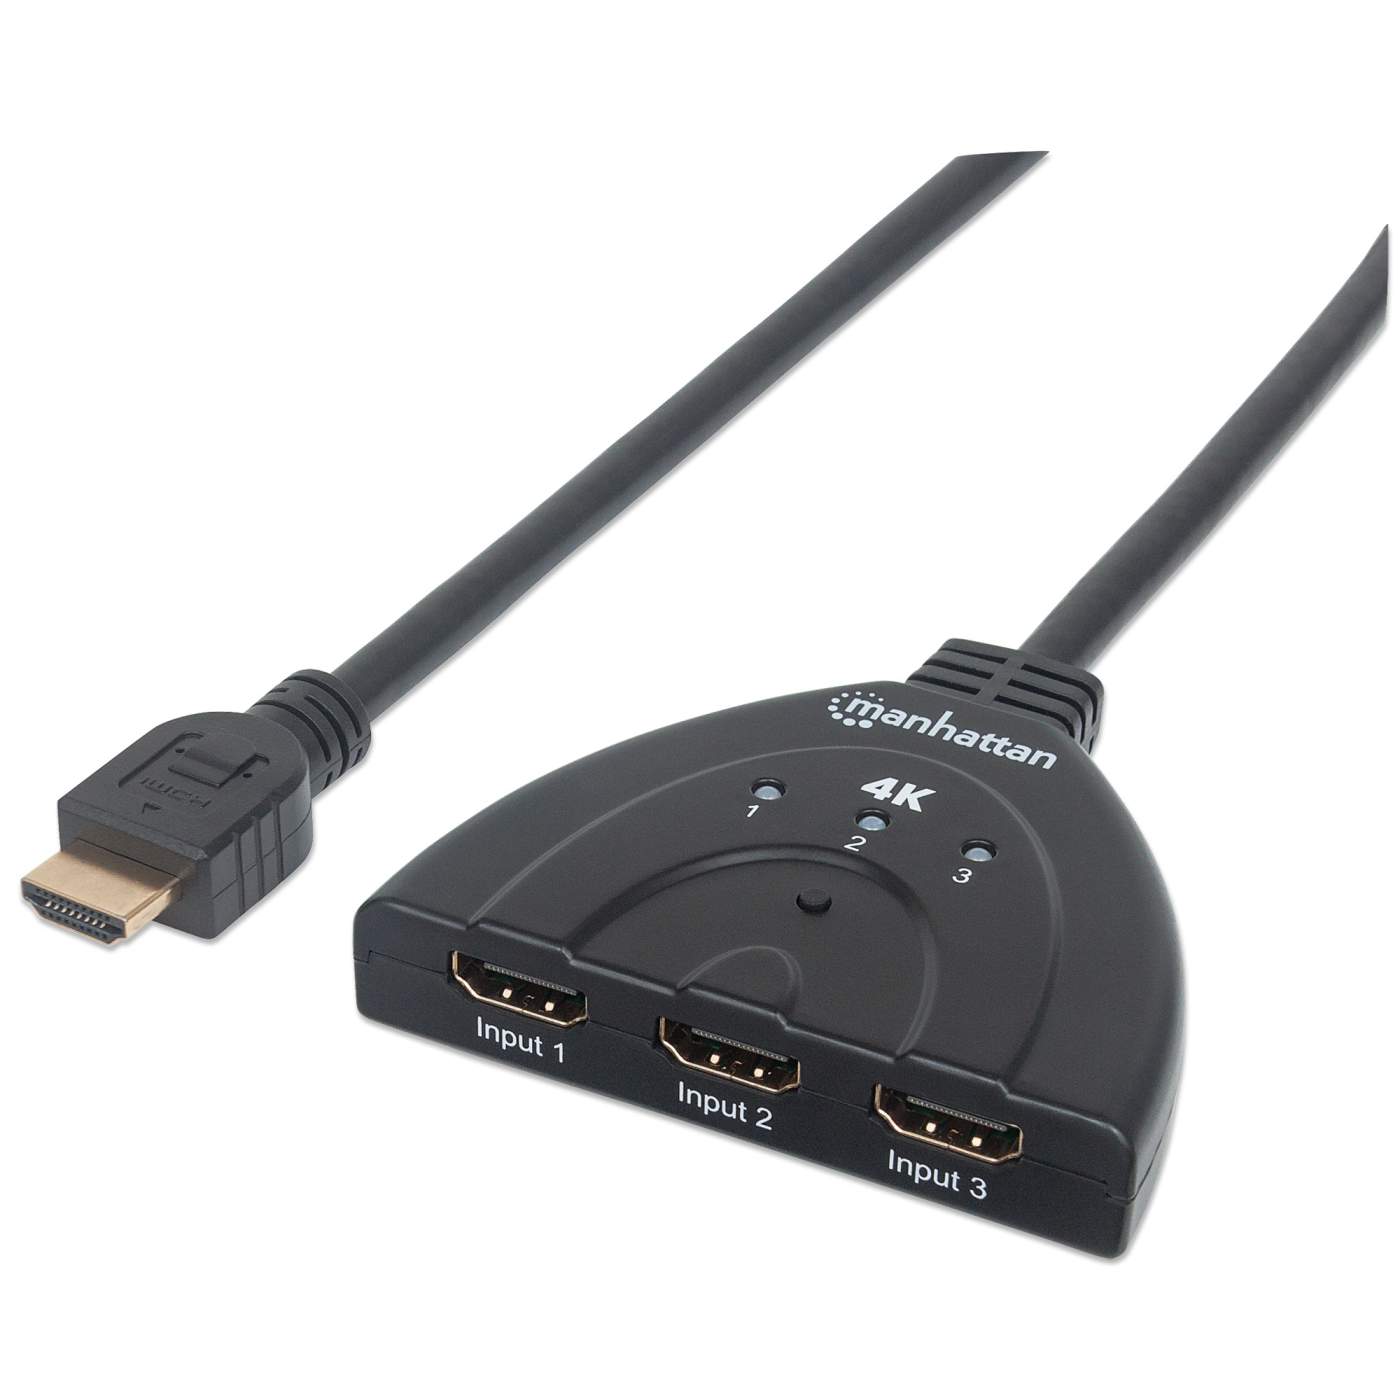 SWITCH SPLITTER ULTRA HDMI – ORBIT ELECTRONIC